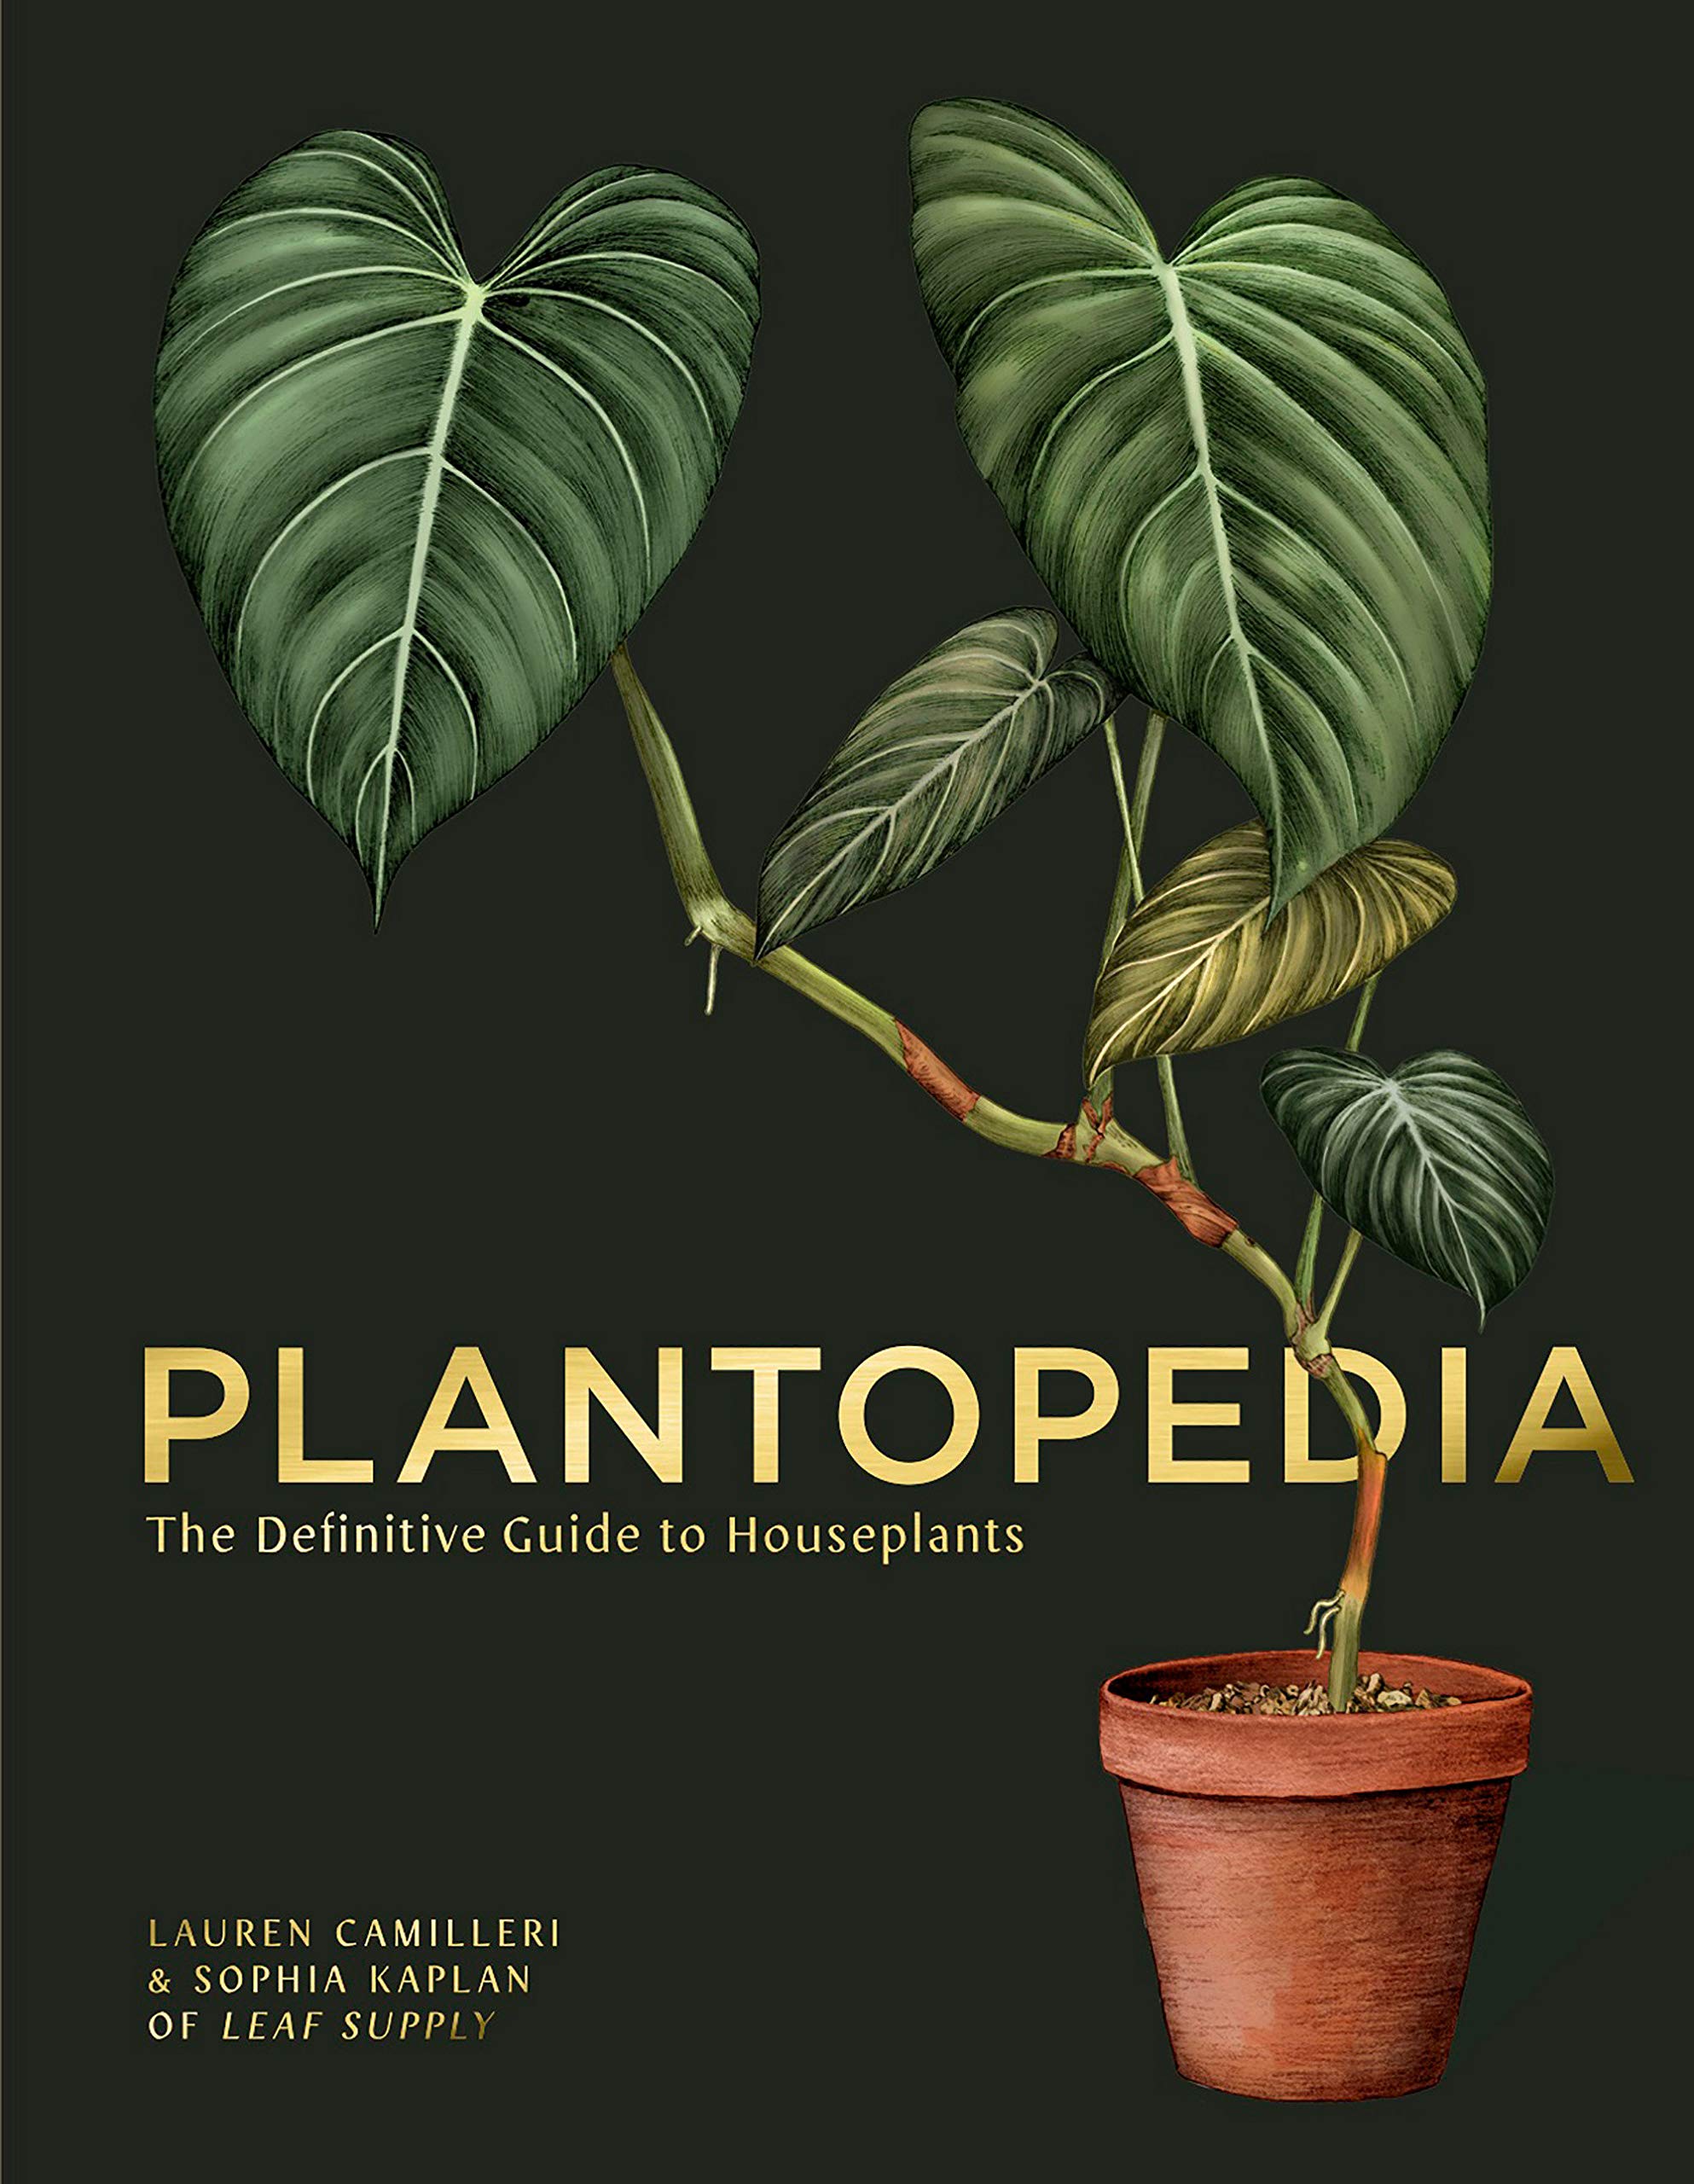 Plantopedia: The Definitive Guide to Housplants